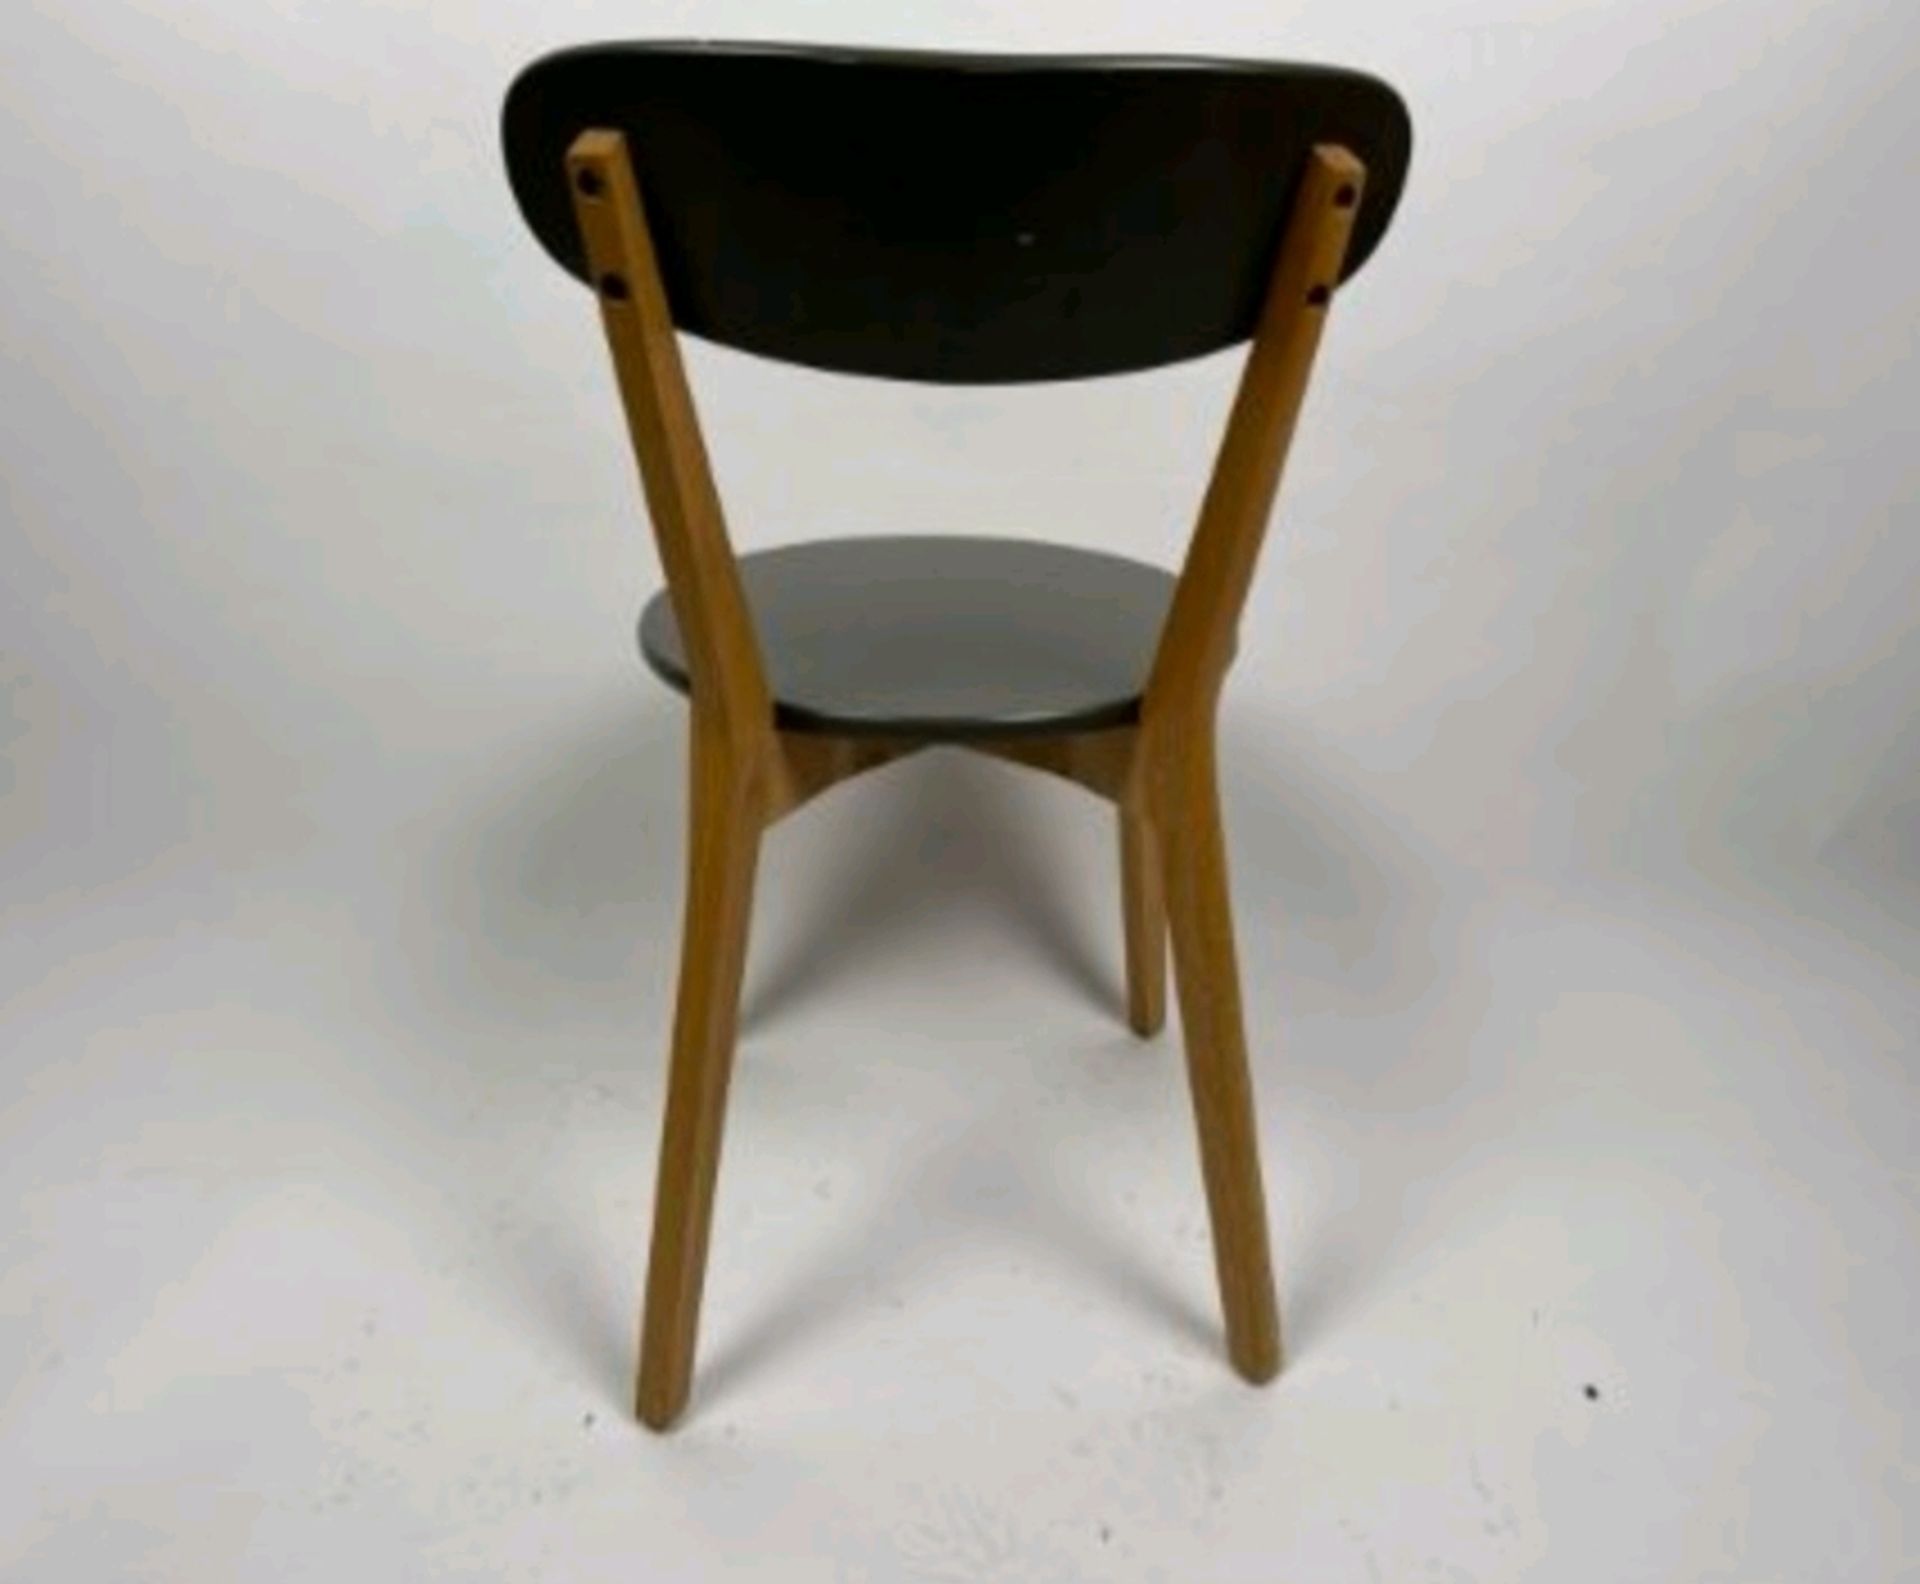 Amara Swedish Style Dining Chair - Image 2 of 3